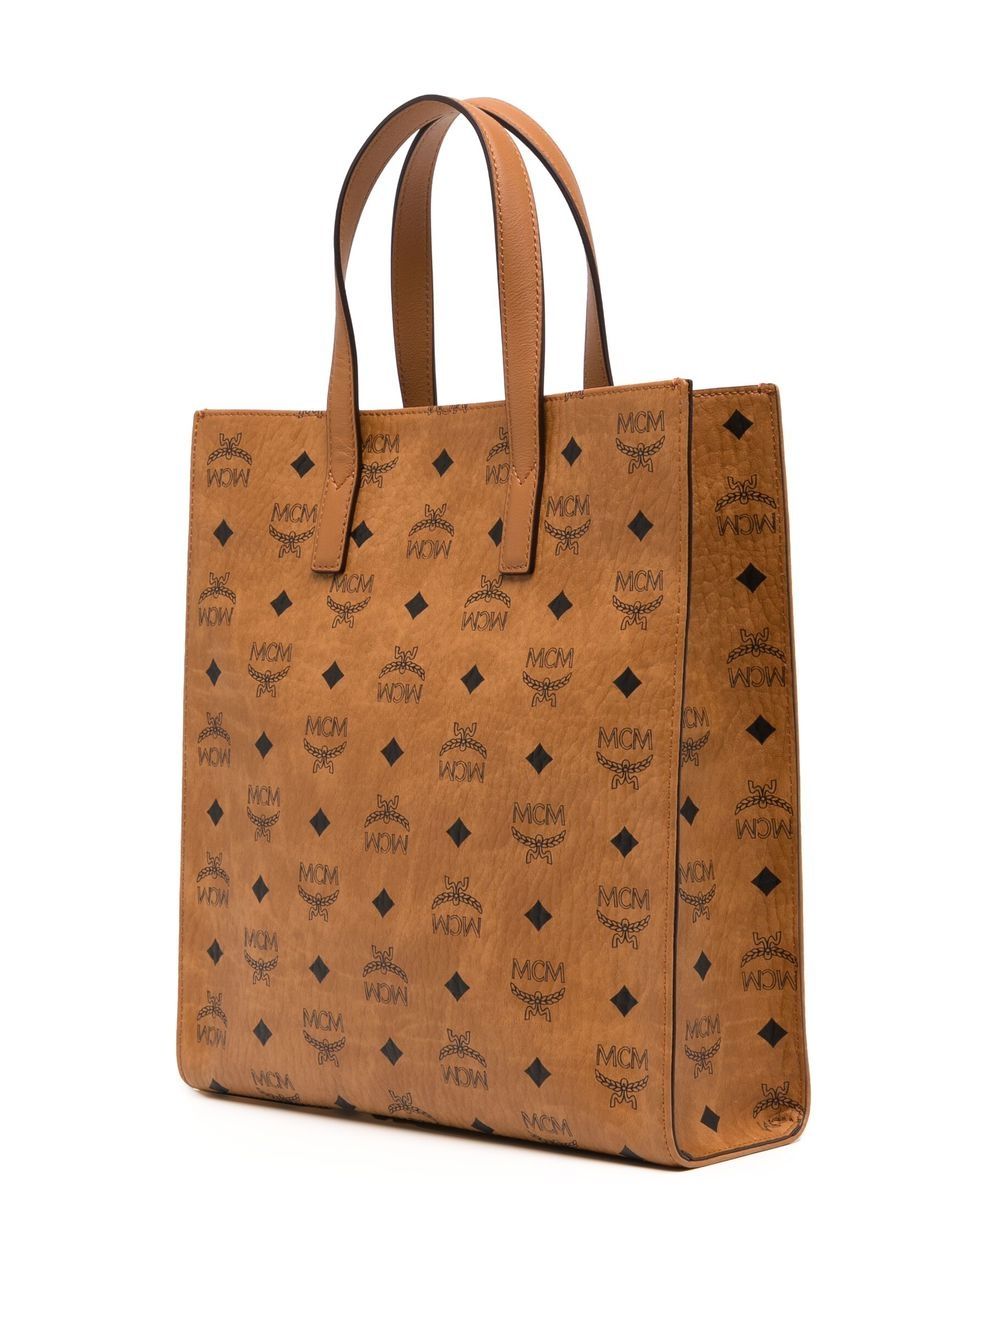 MCM Bags for Women - Shop on FARFETCH